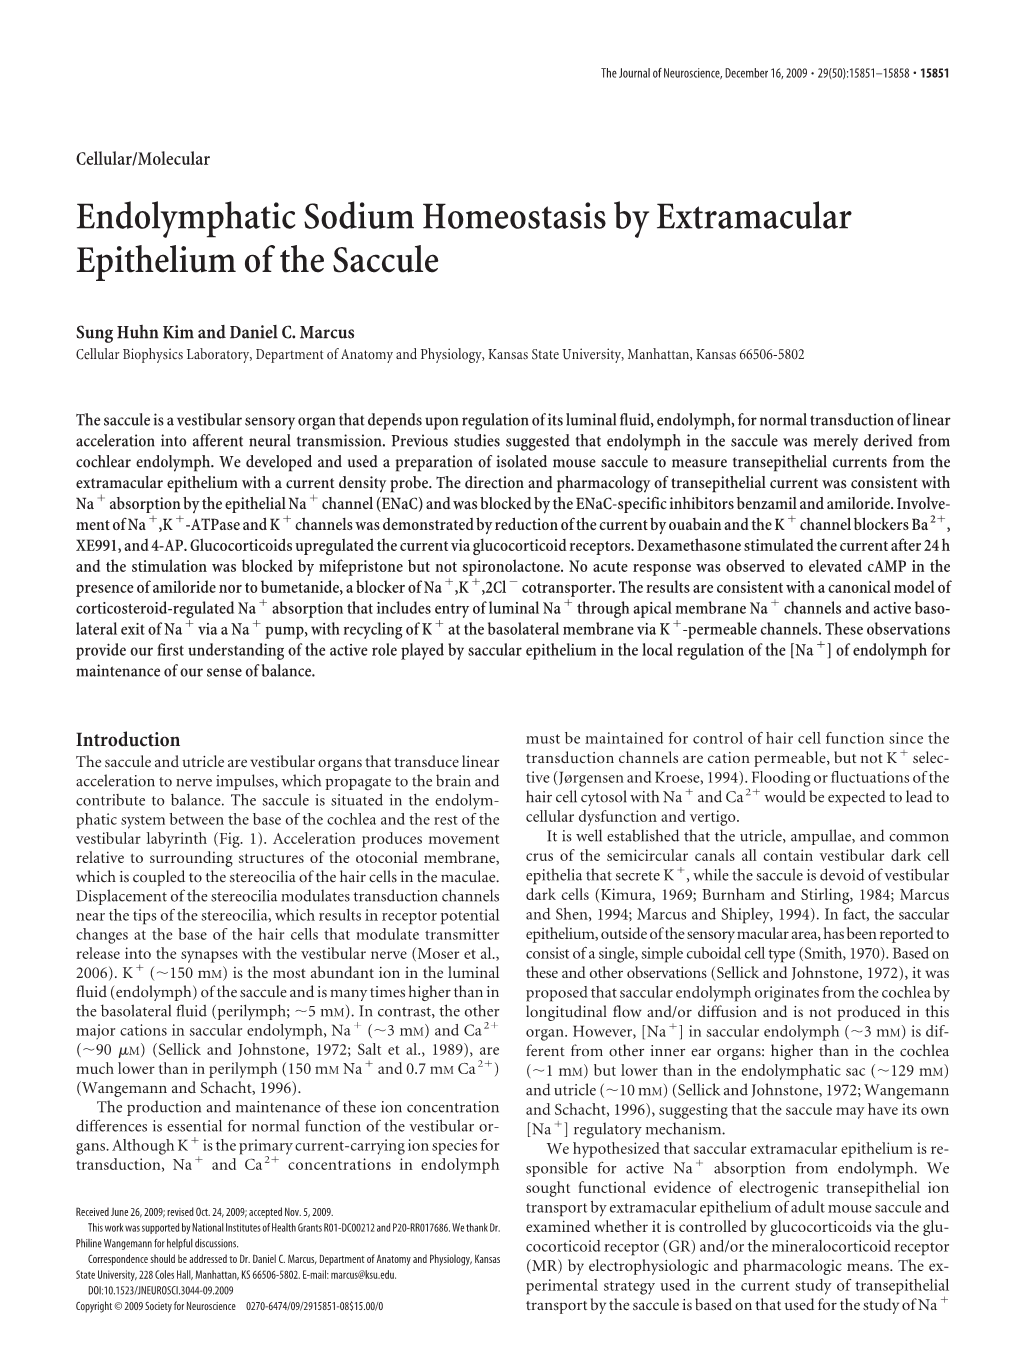 Endolymphatic Sodium Homeostasis by Extramacular Epithelium of the Saccule